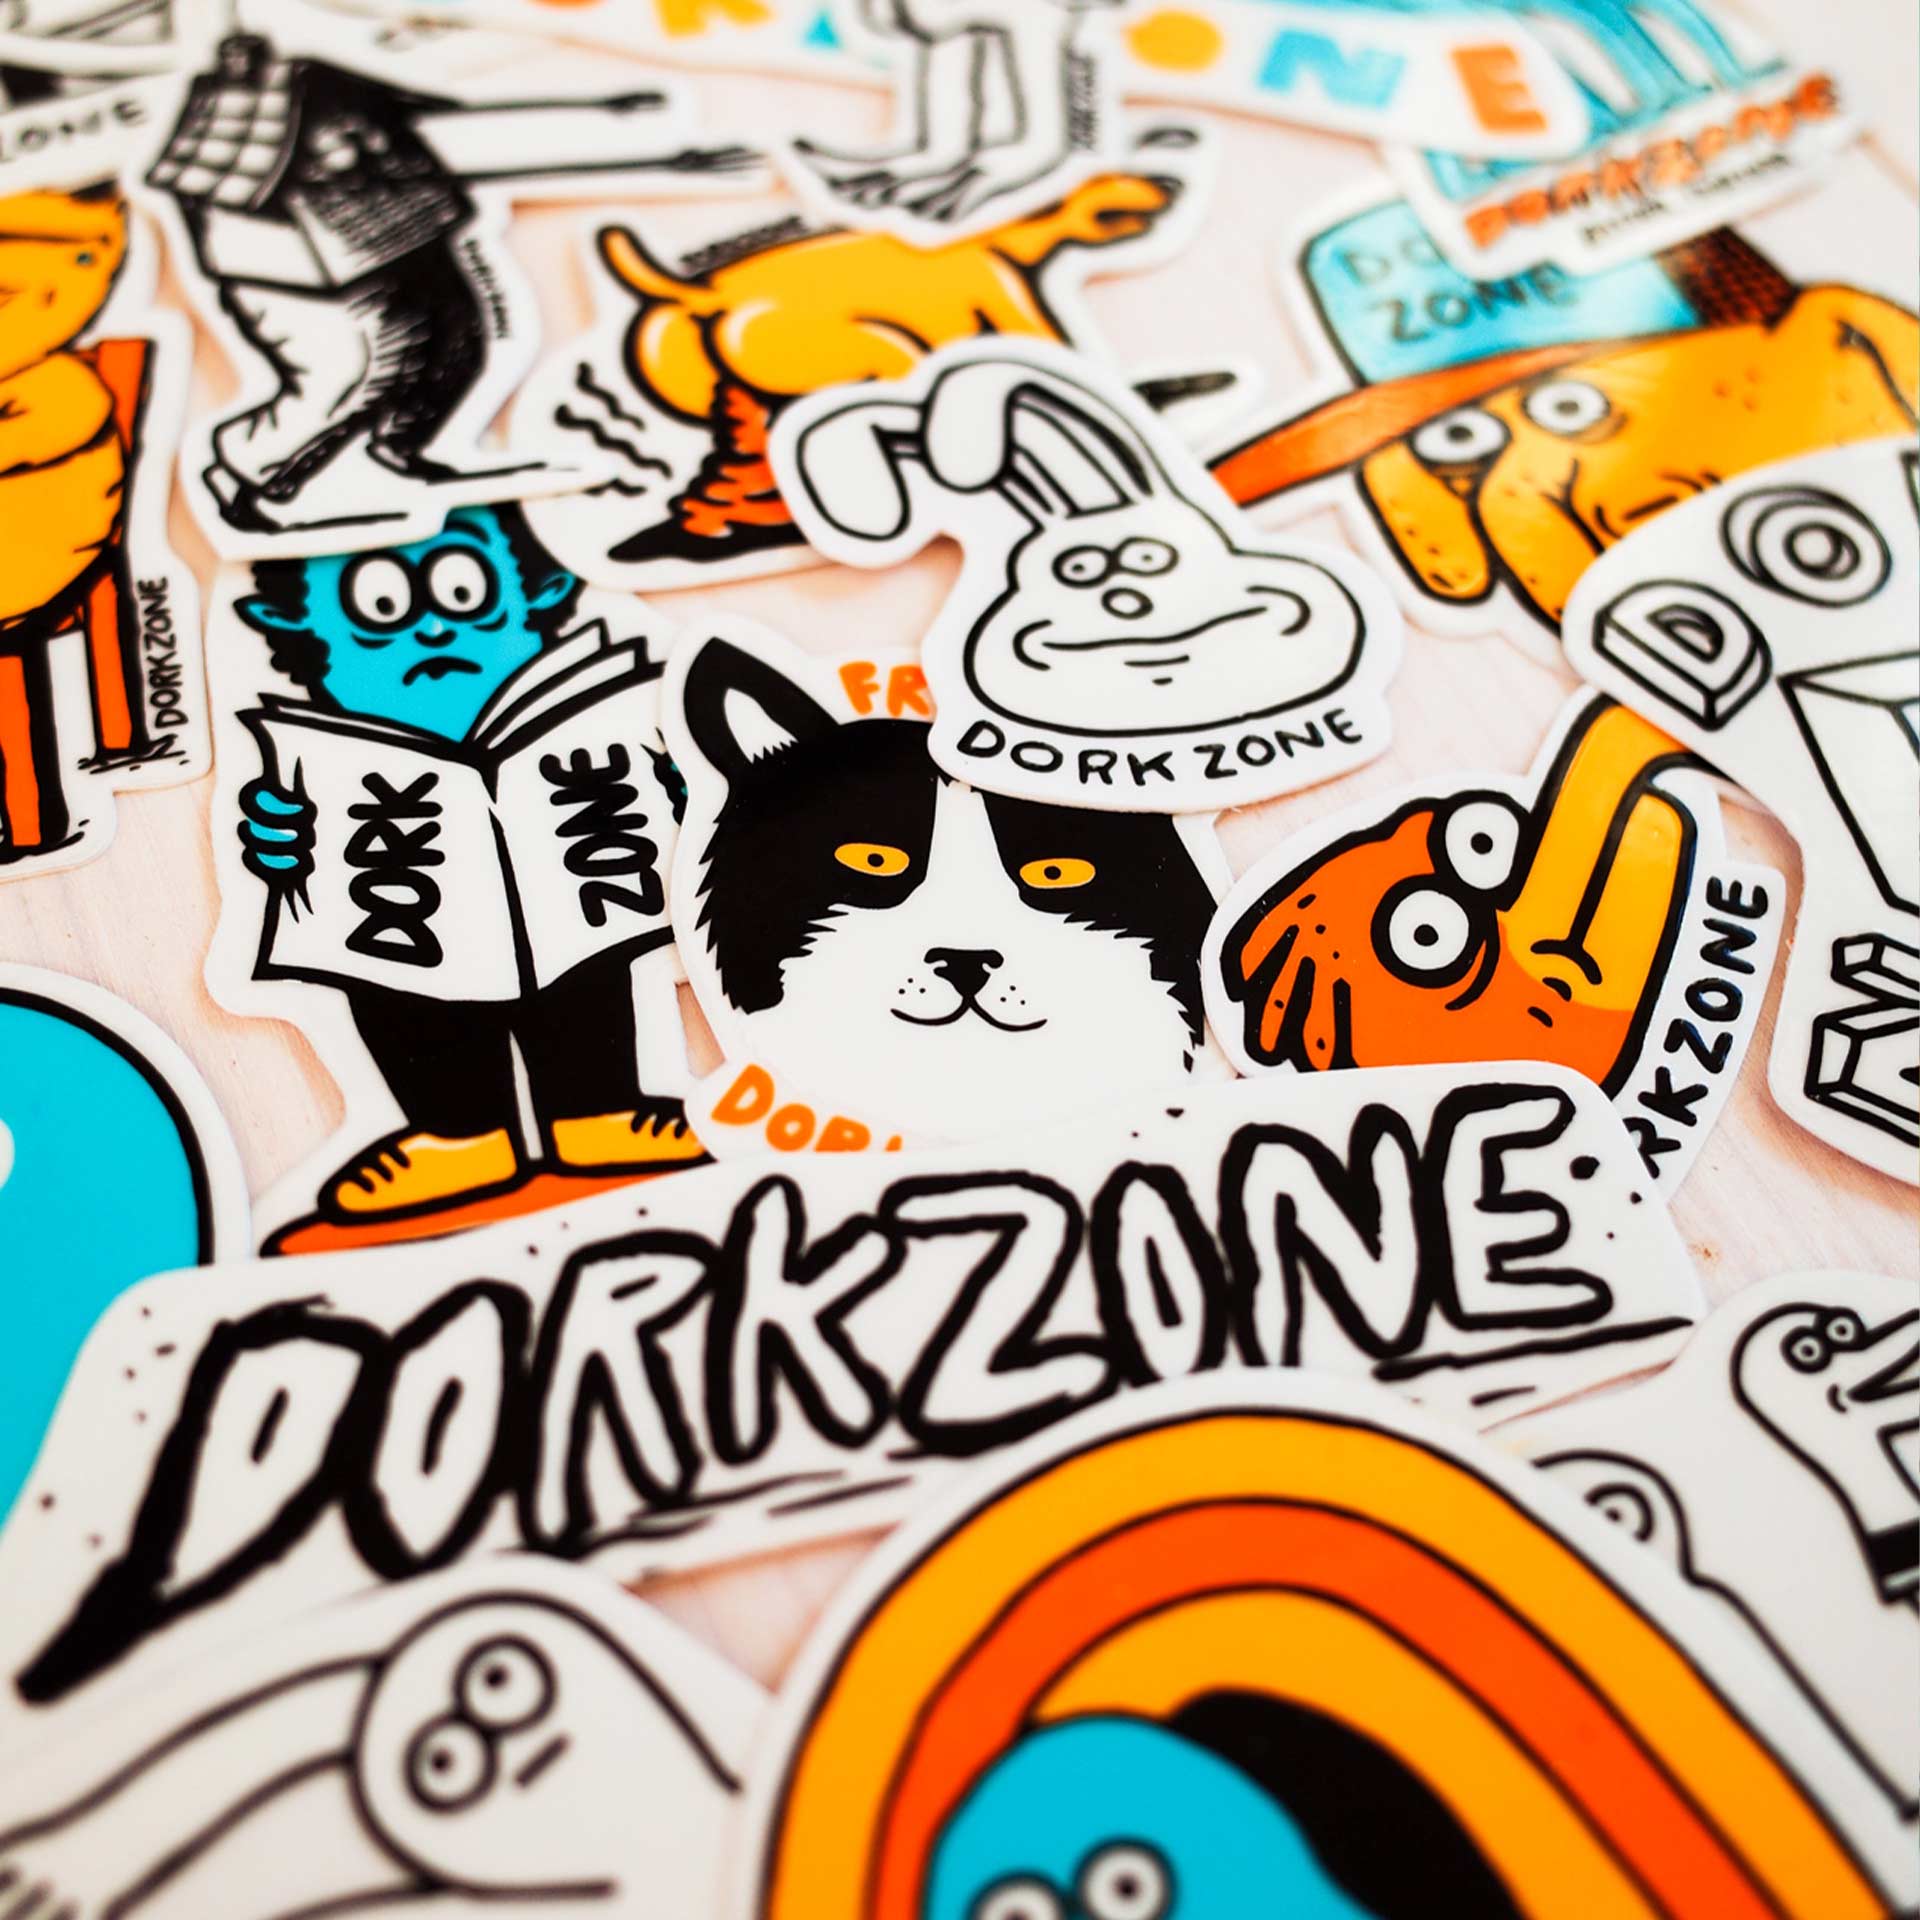 Dorkzone Sticker Pack